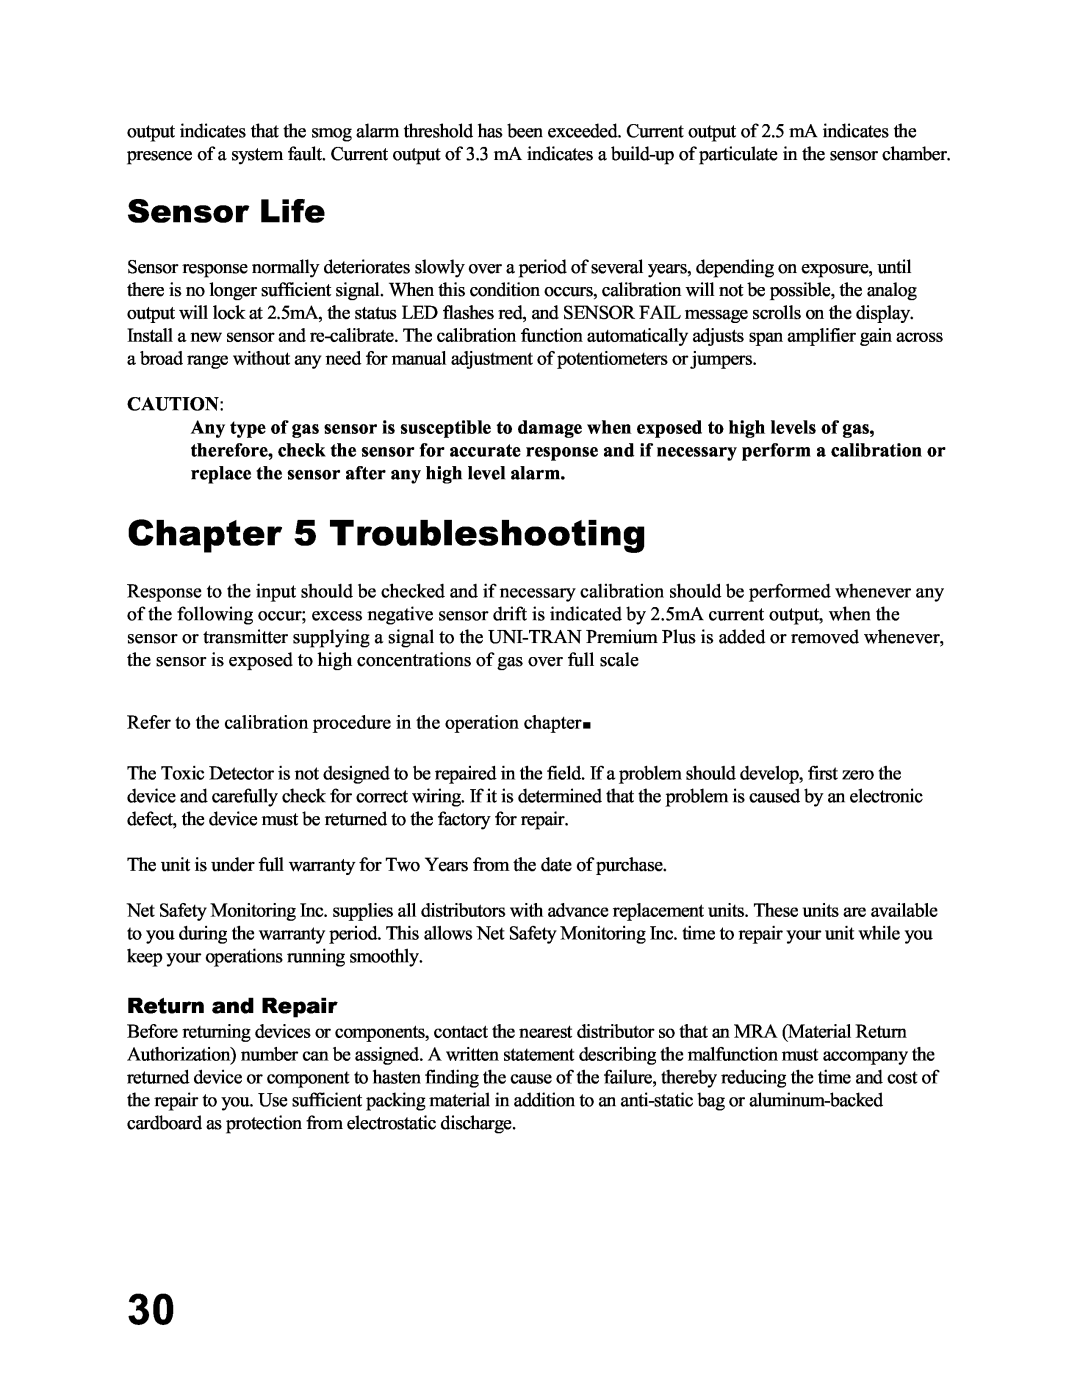 Emerson UT-P+-STXXXX, MA N-00 05-00 user manual Troubleshooting, Sensor Life 